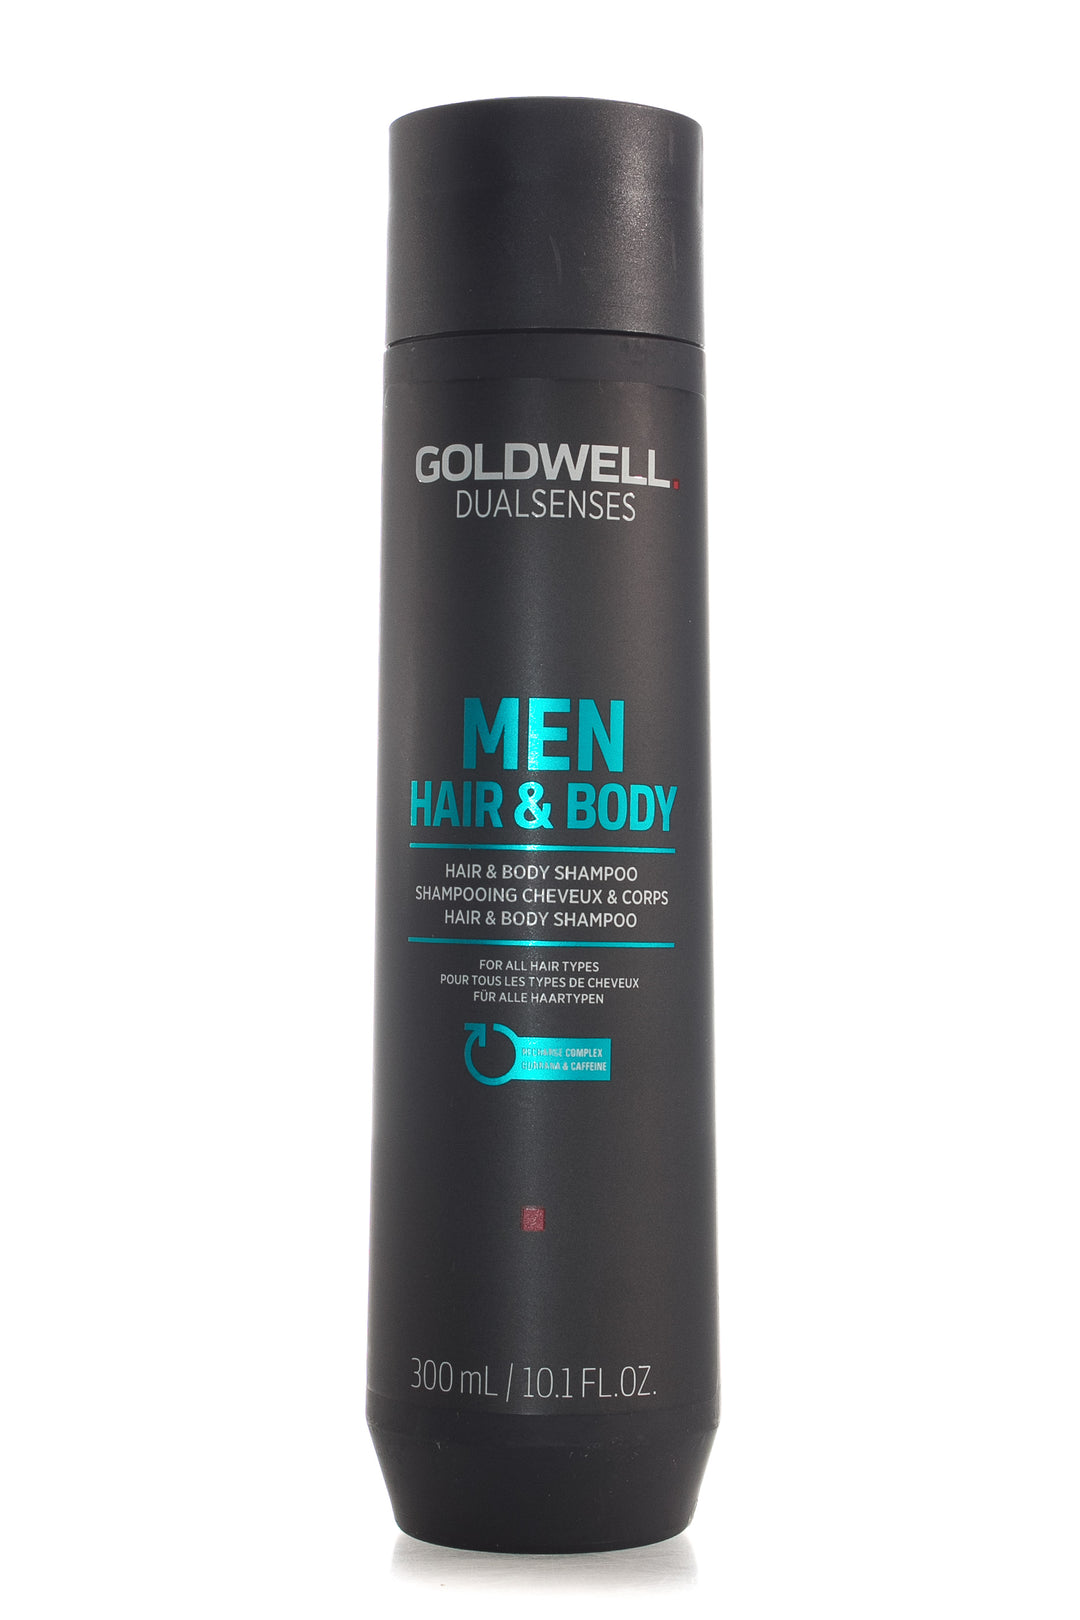 Product Image: Goldwell Dualsenses Men Hair & Body Shampoo - 300ml